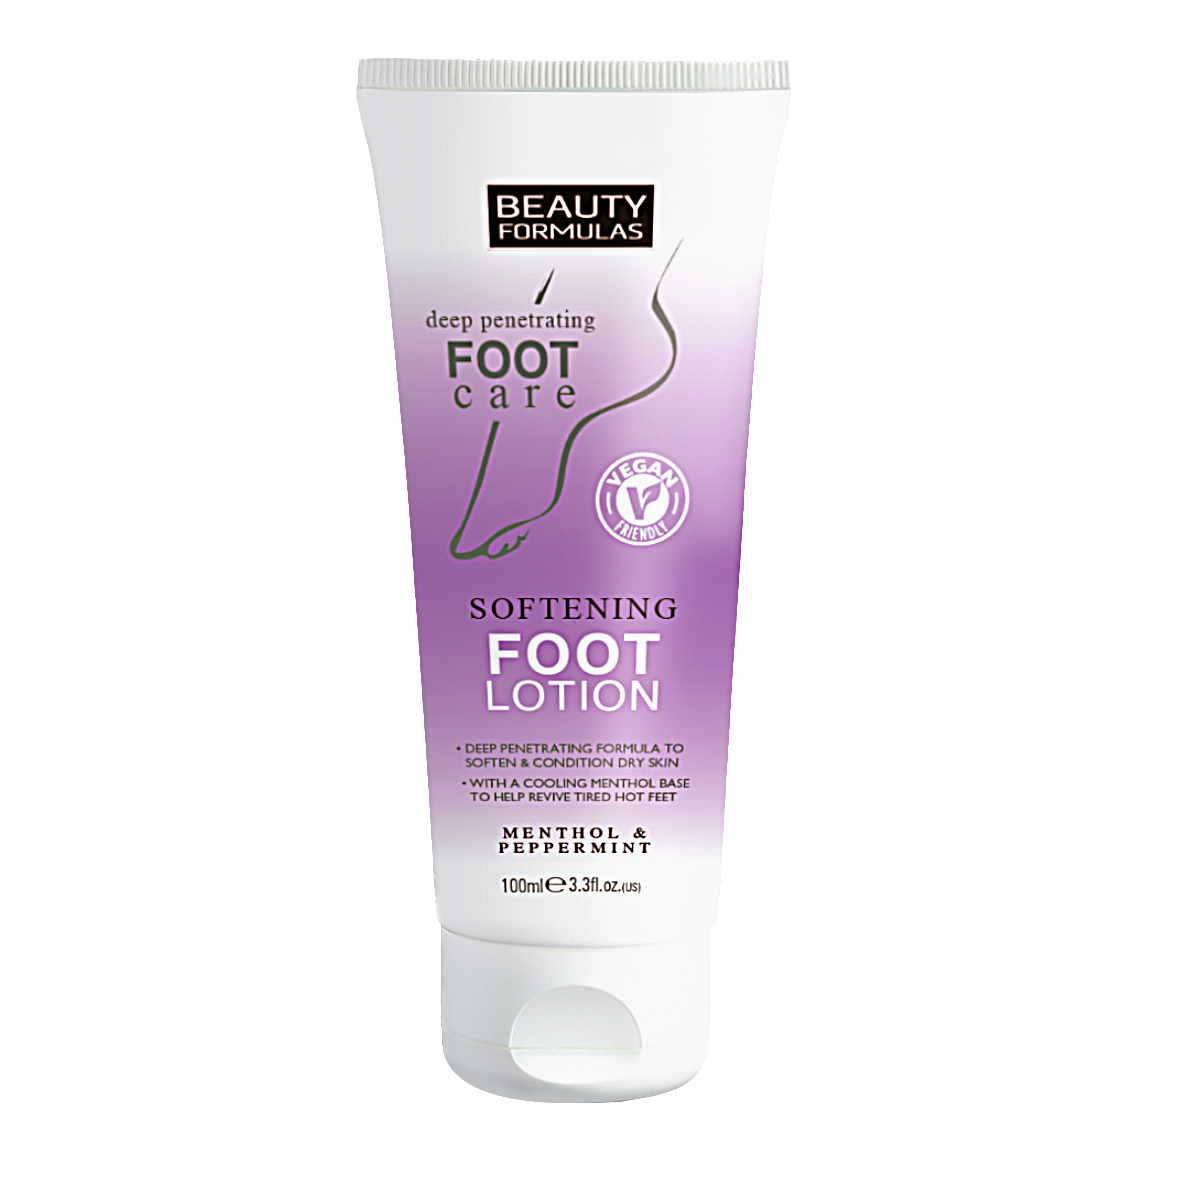 Deep penetrating foot care softening foot lotion.